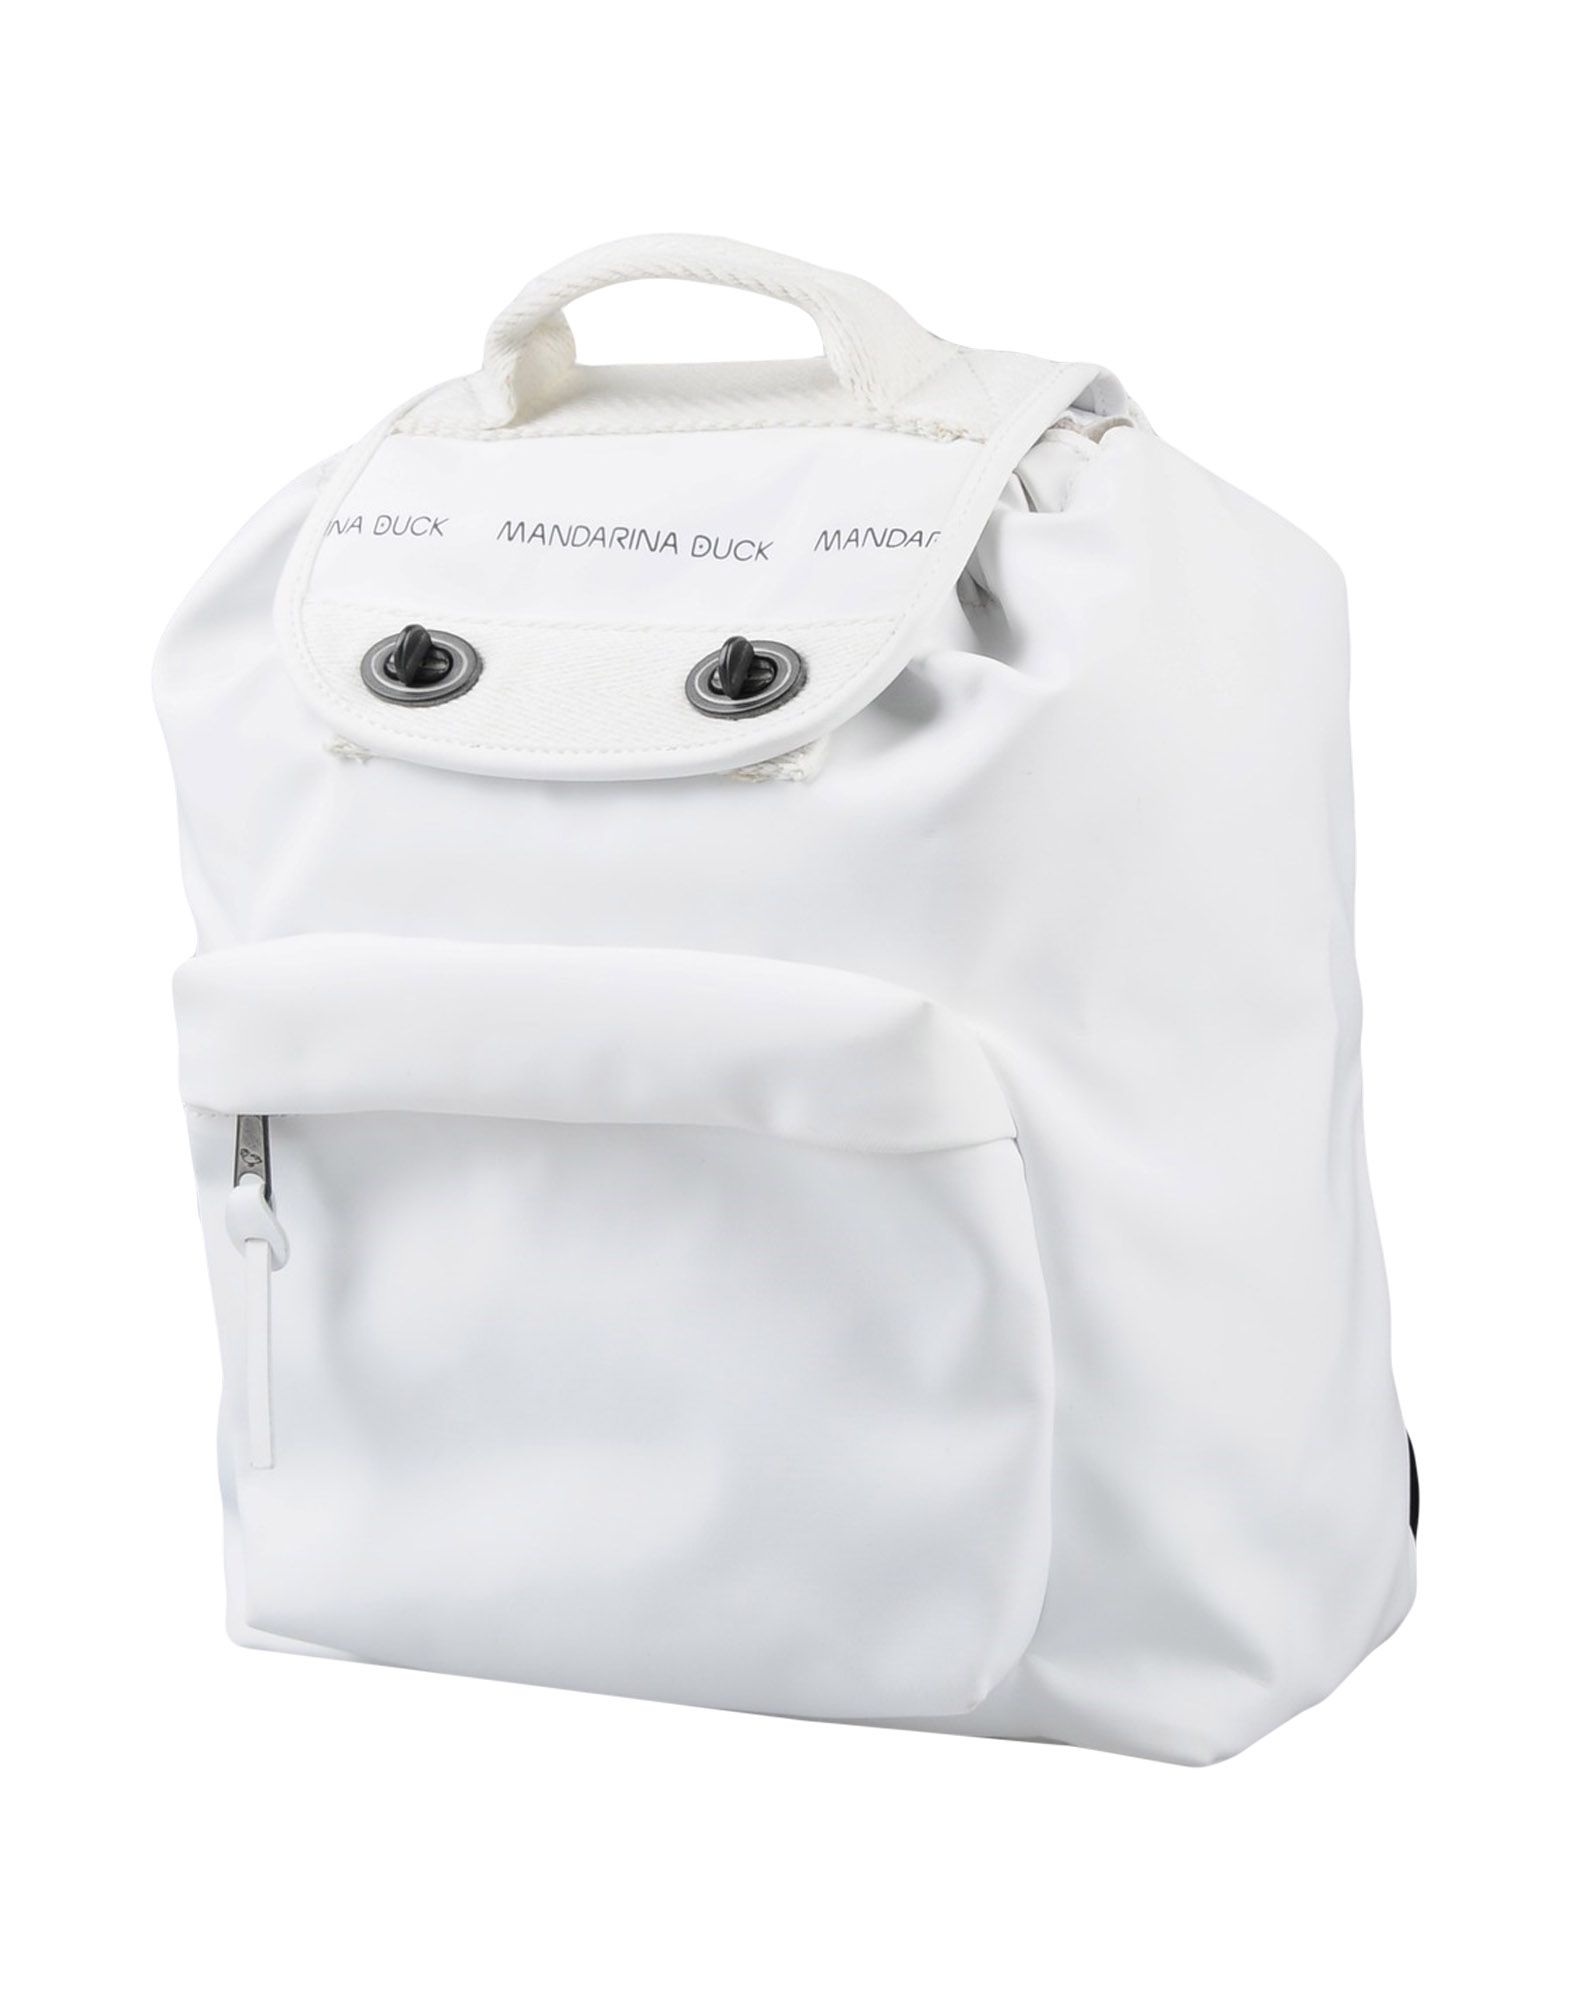 MANDARINA DUCK Backpack & fanny pack,45406514WV 1